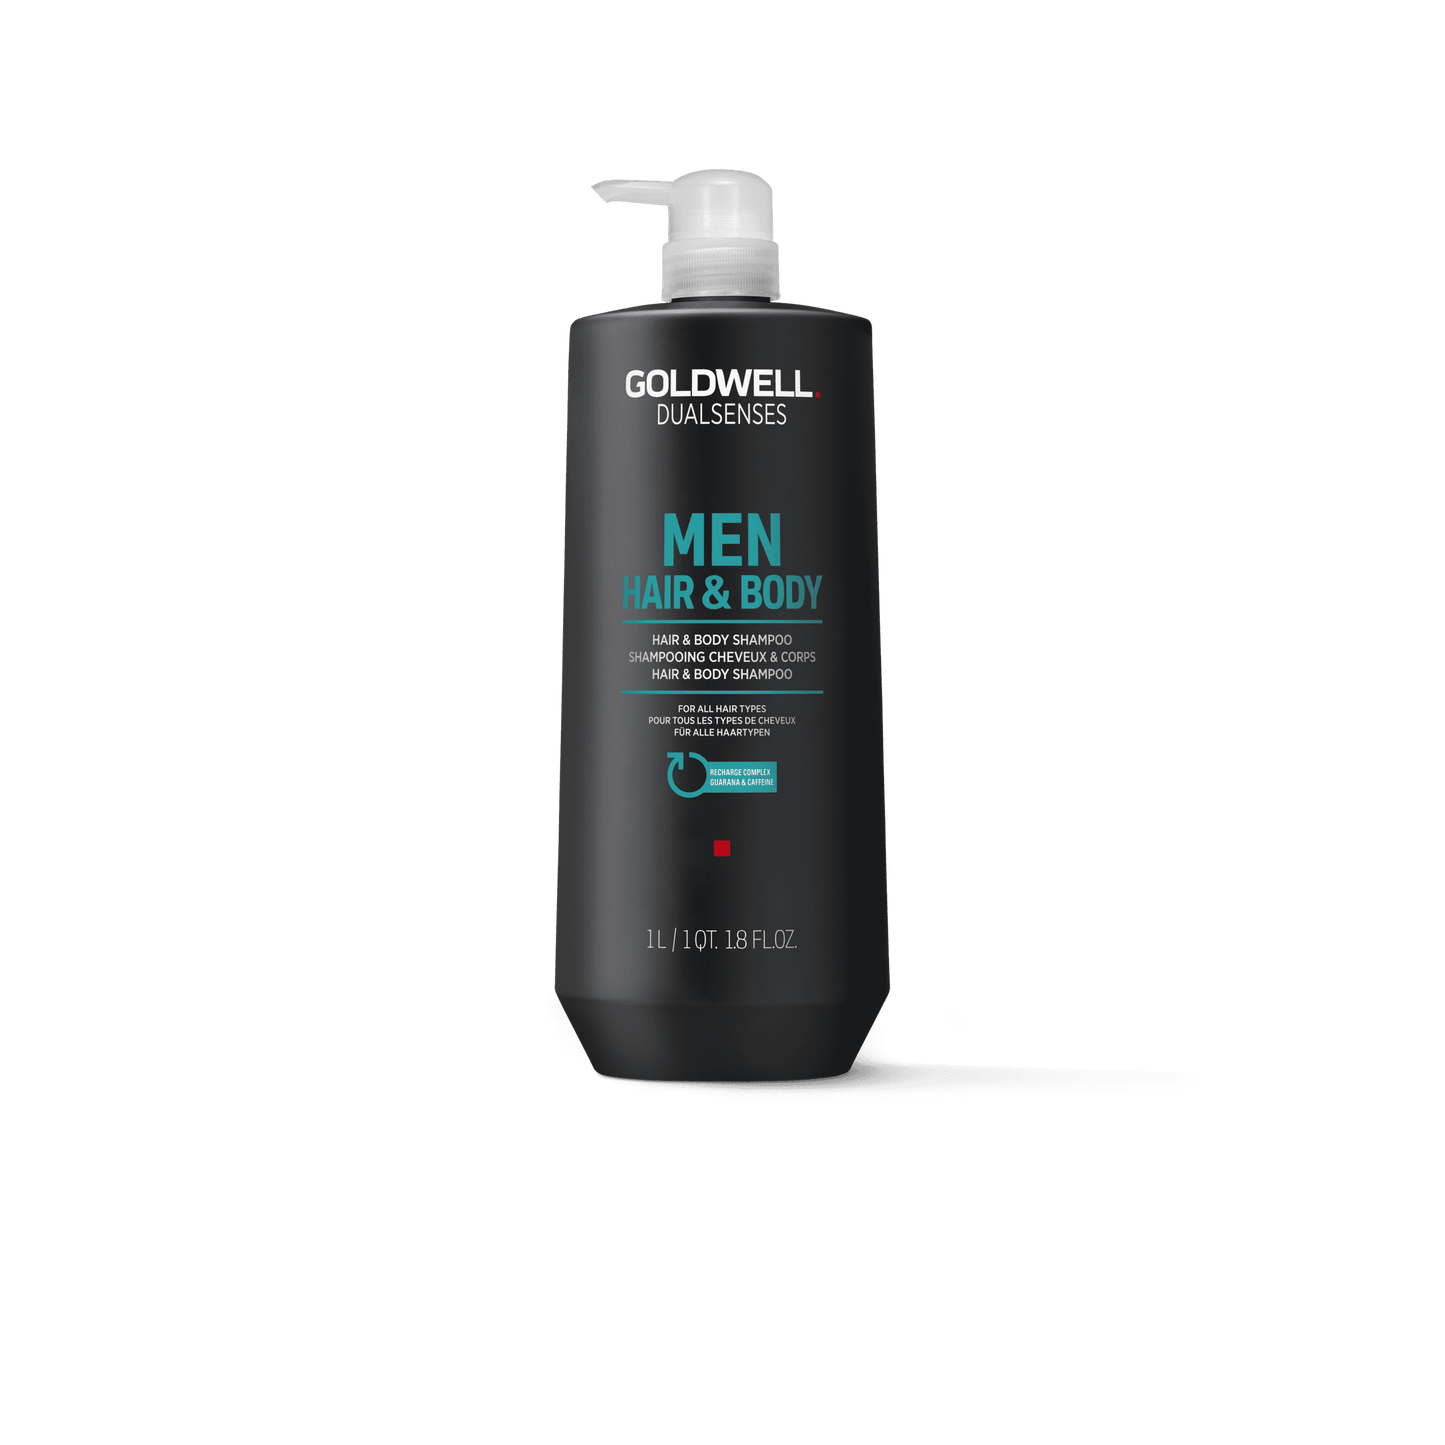 GOLDWELL Dualsenses Men Hair & Body Shampoo  1000ml by Frisör Schäfer Online Shop.